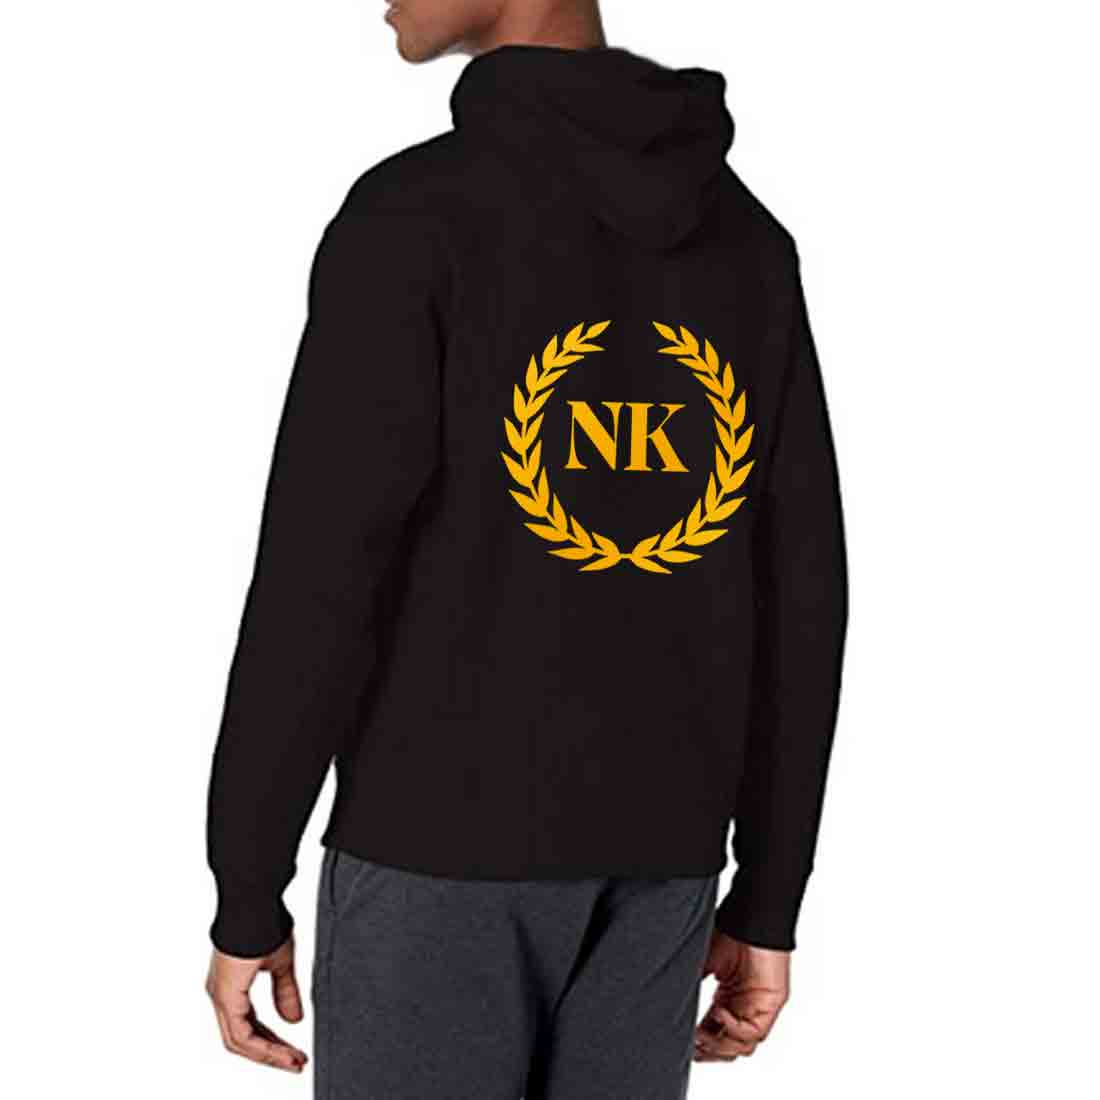 Nutcase Customized Black Hoodie hoodies for Men Women-Add Text